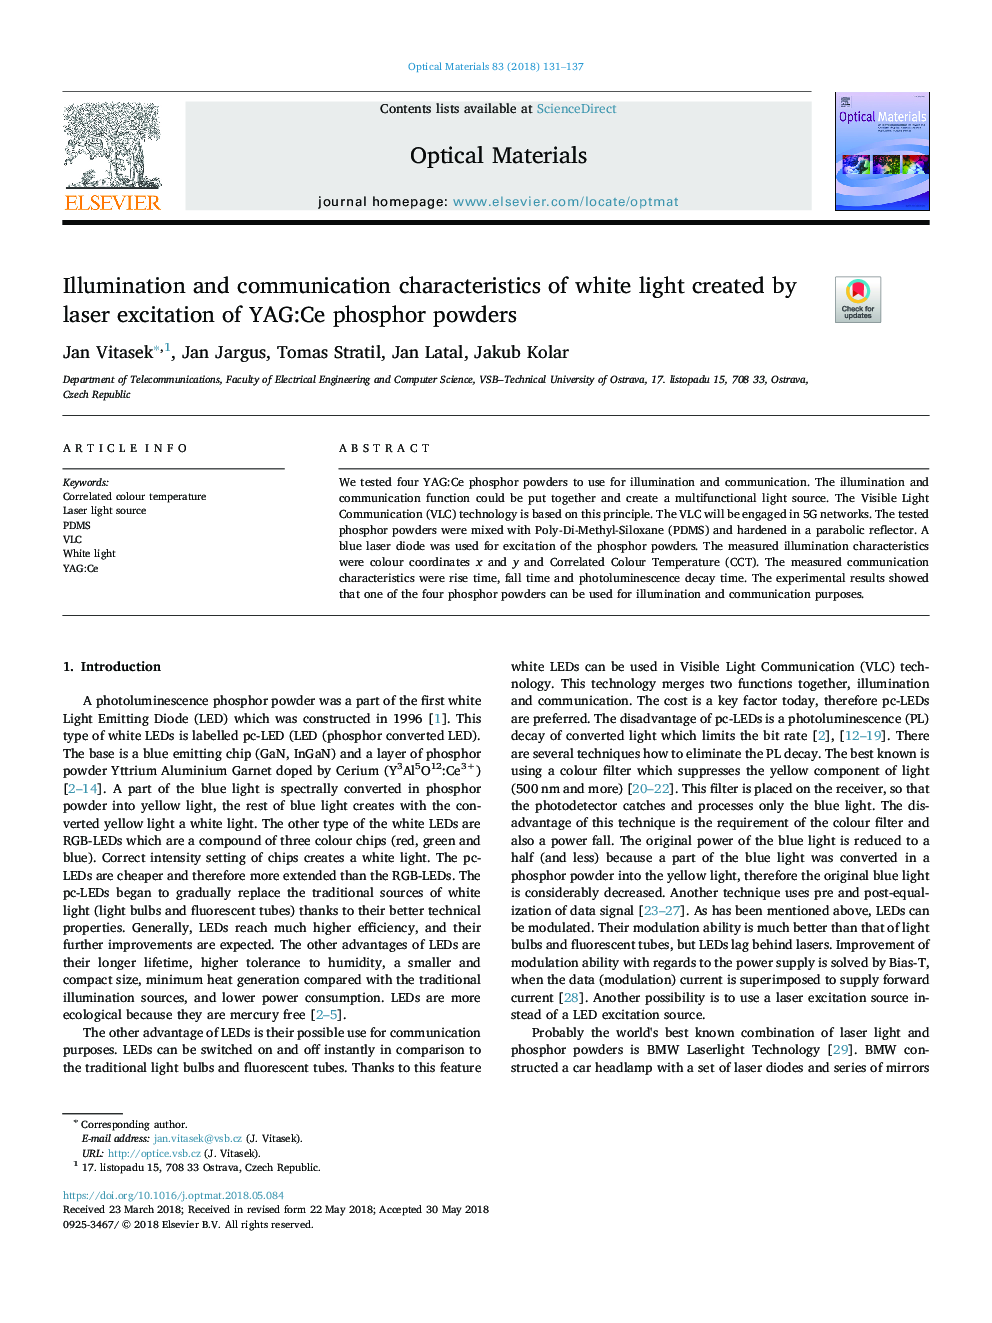 Illumination and communication characteristics of white light created by laser excitation of YAG:Ce phosphor powders